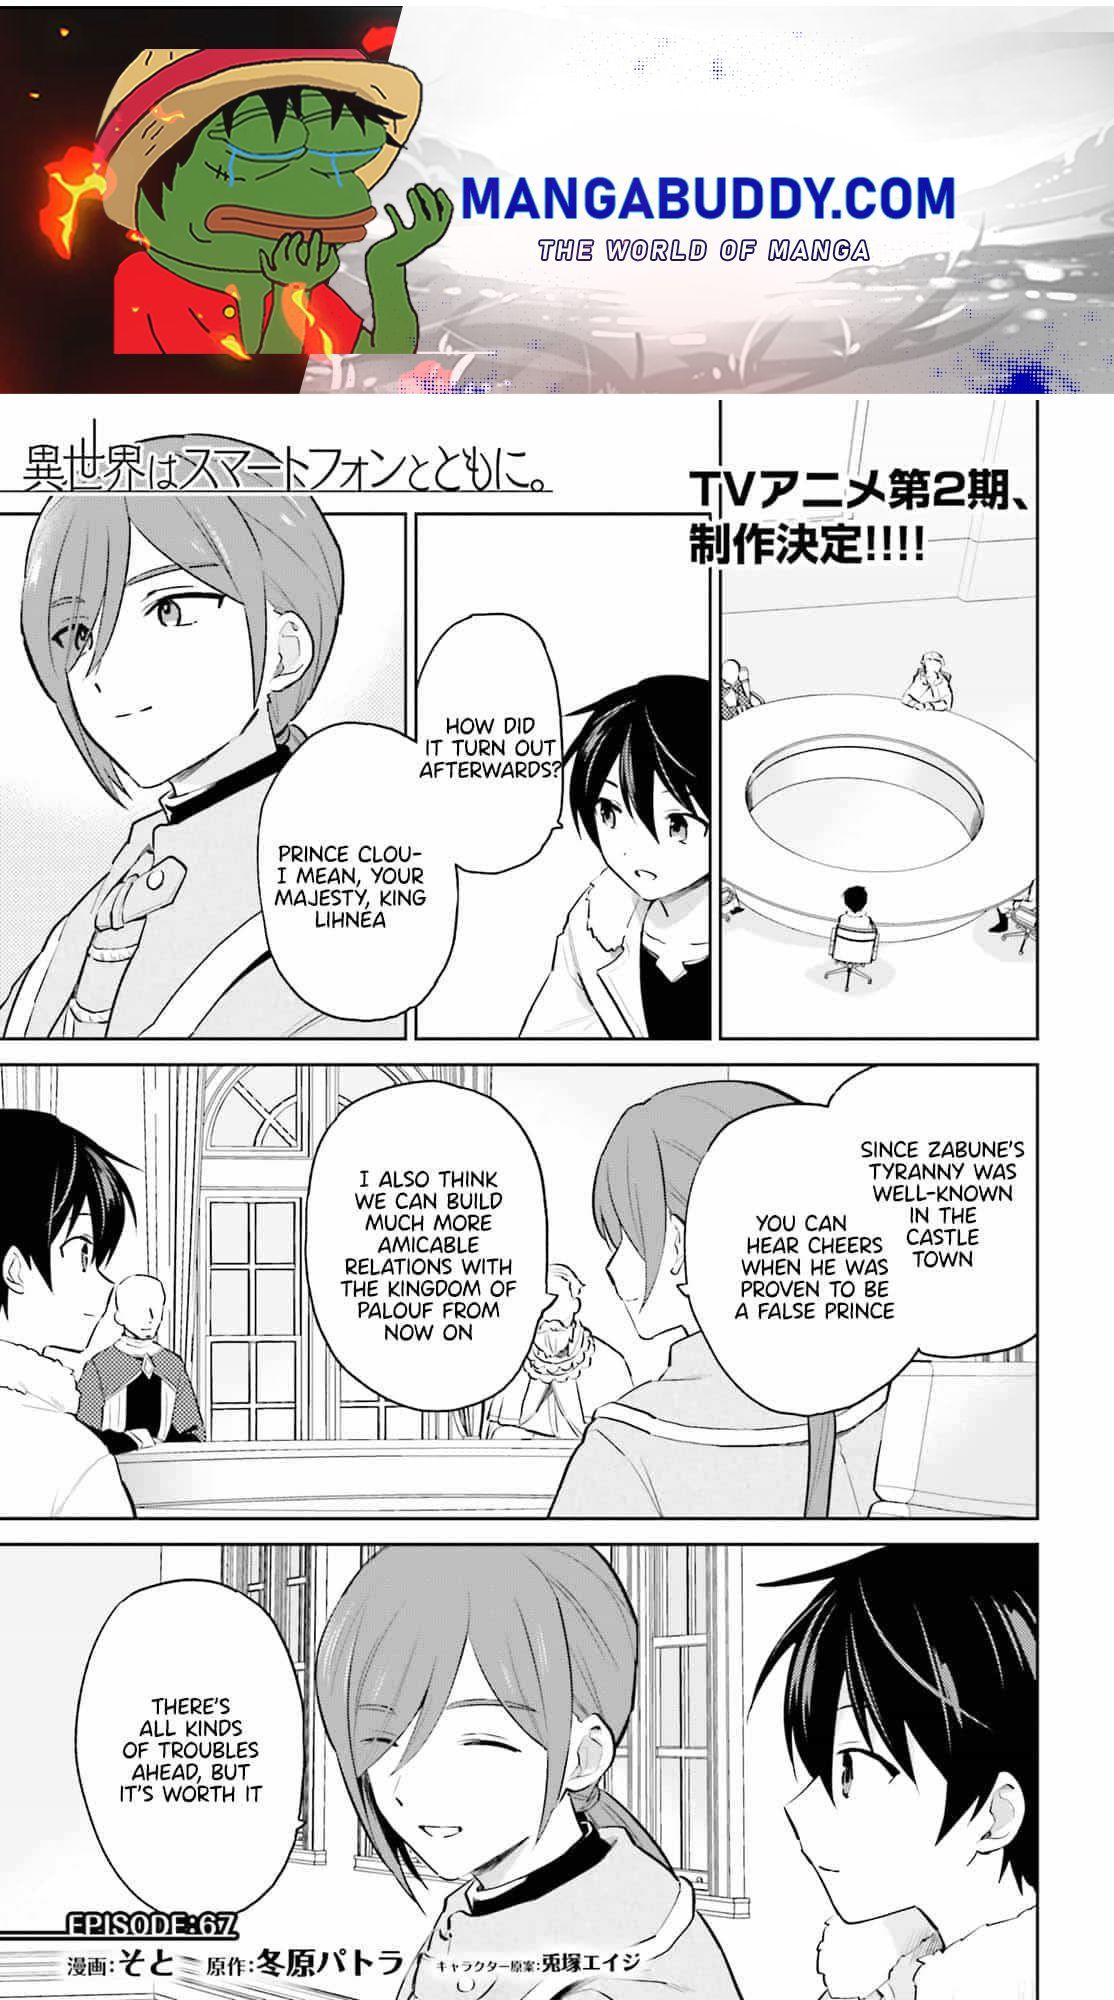 Isekai wa Smartphone to Tomo ni. Manga - Read the Latest Issues high-quality